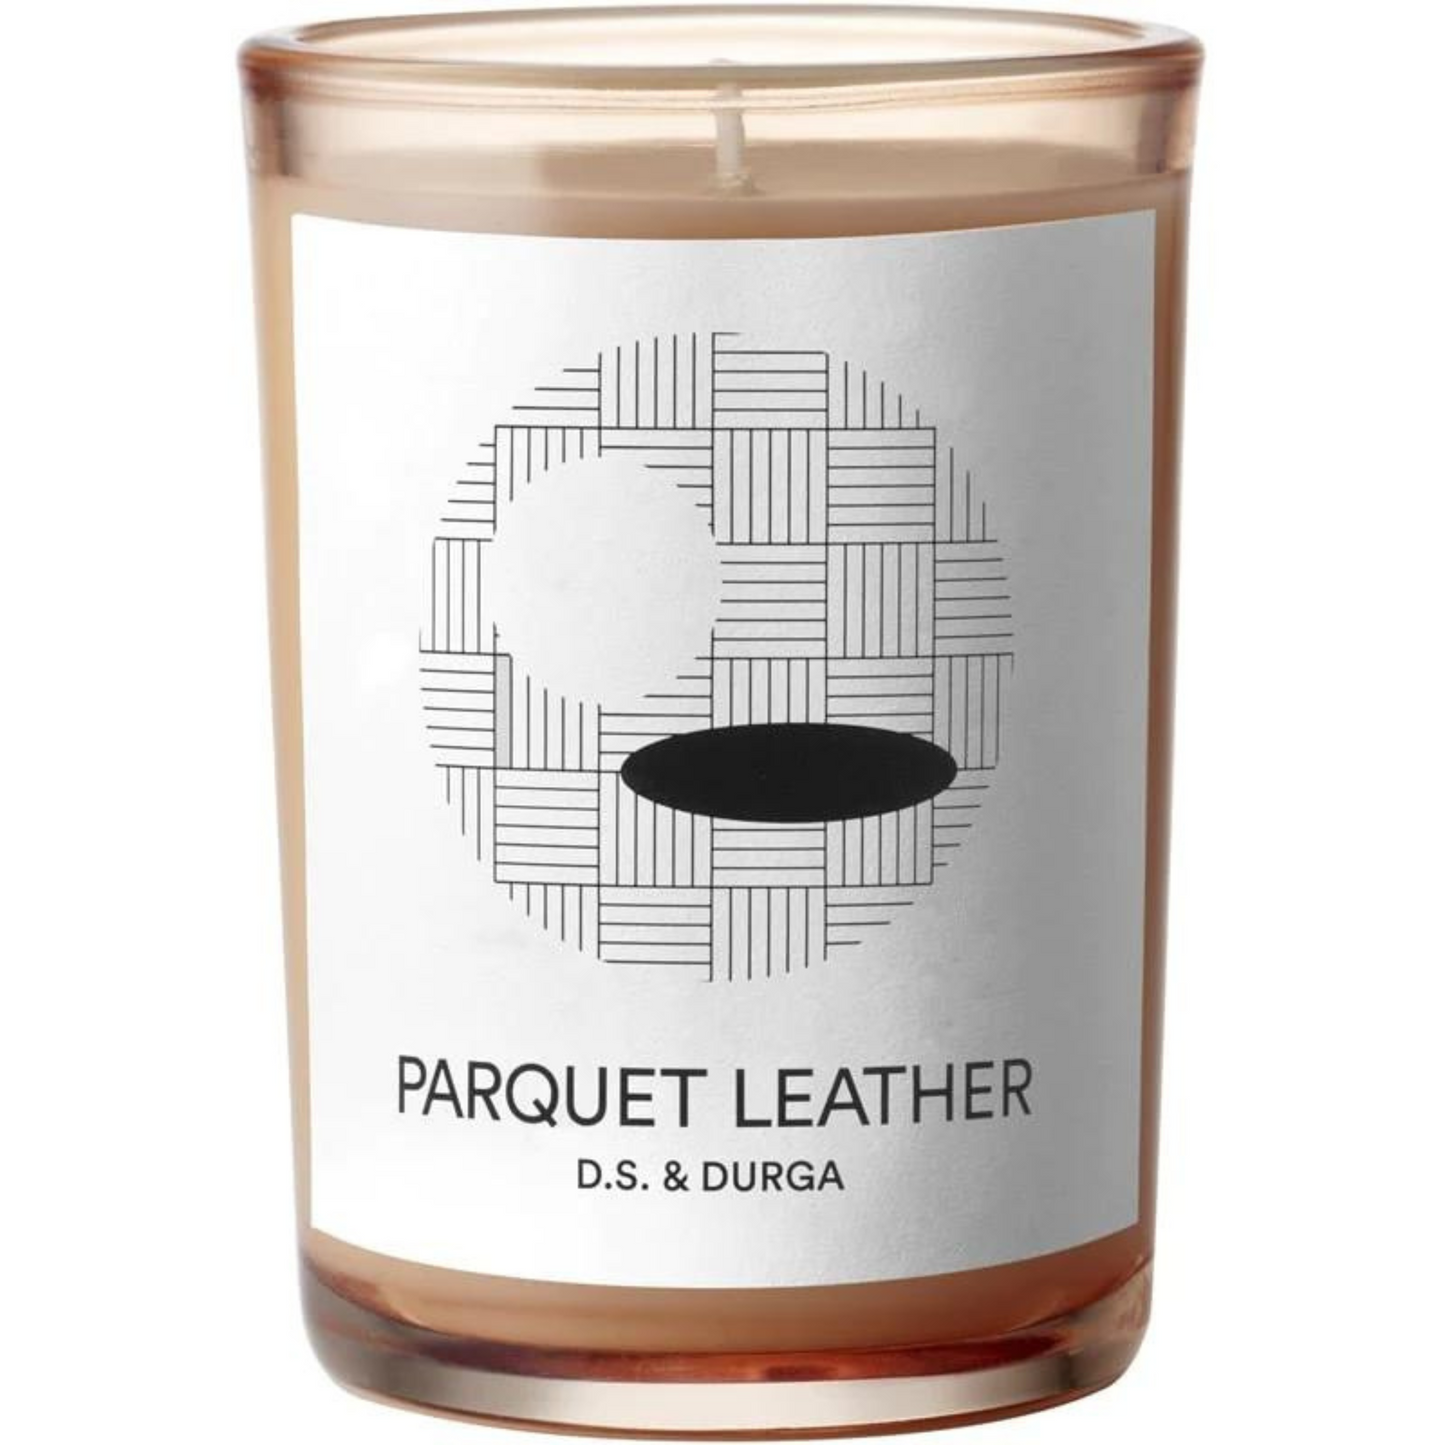 Primary Image of Parquet Leather (7 oz)